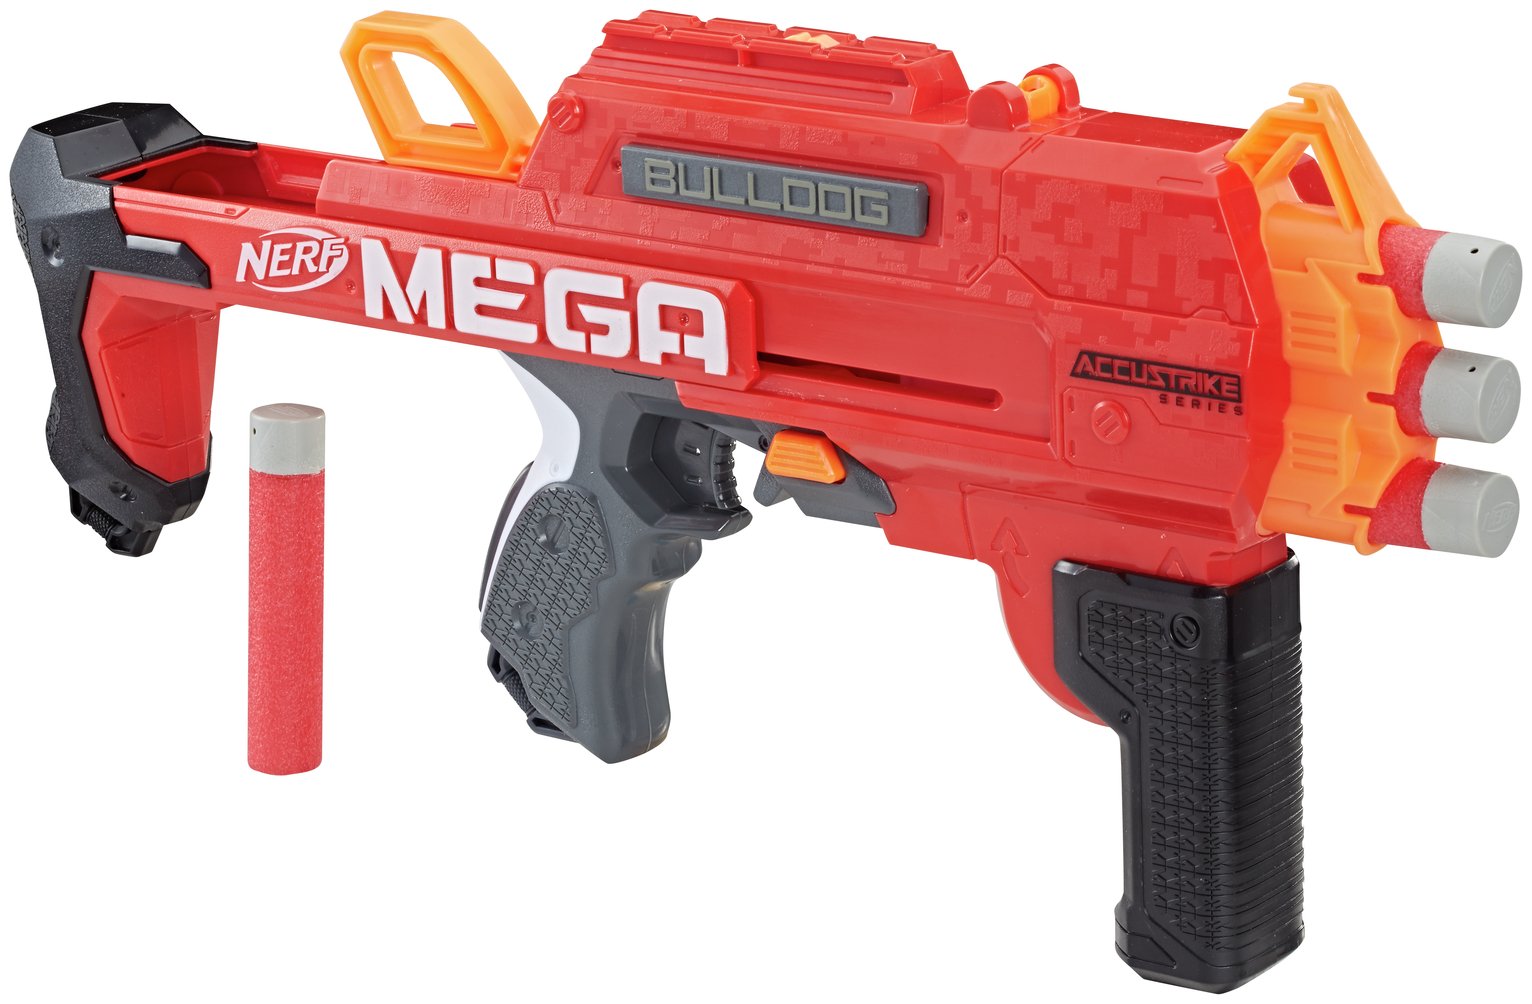 Nerf AccuStrike Mega Bulldog Blaster